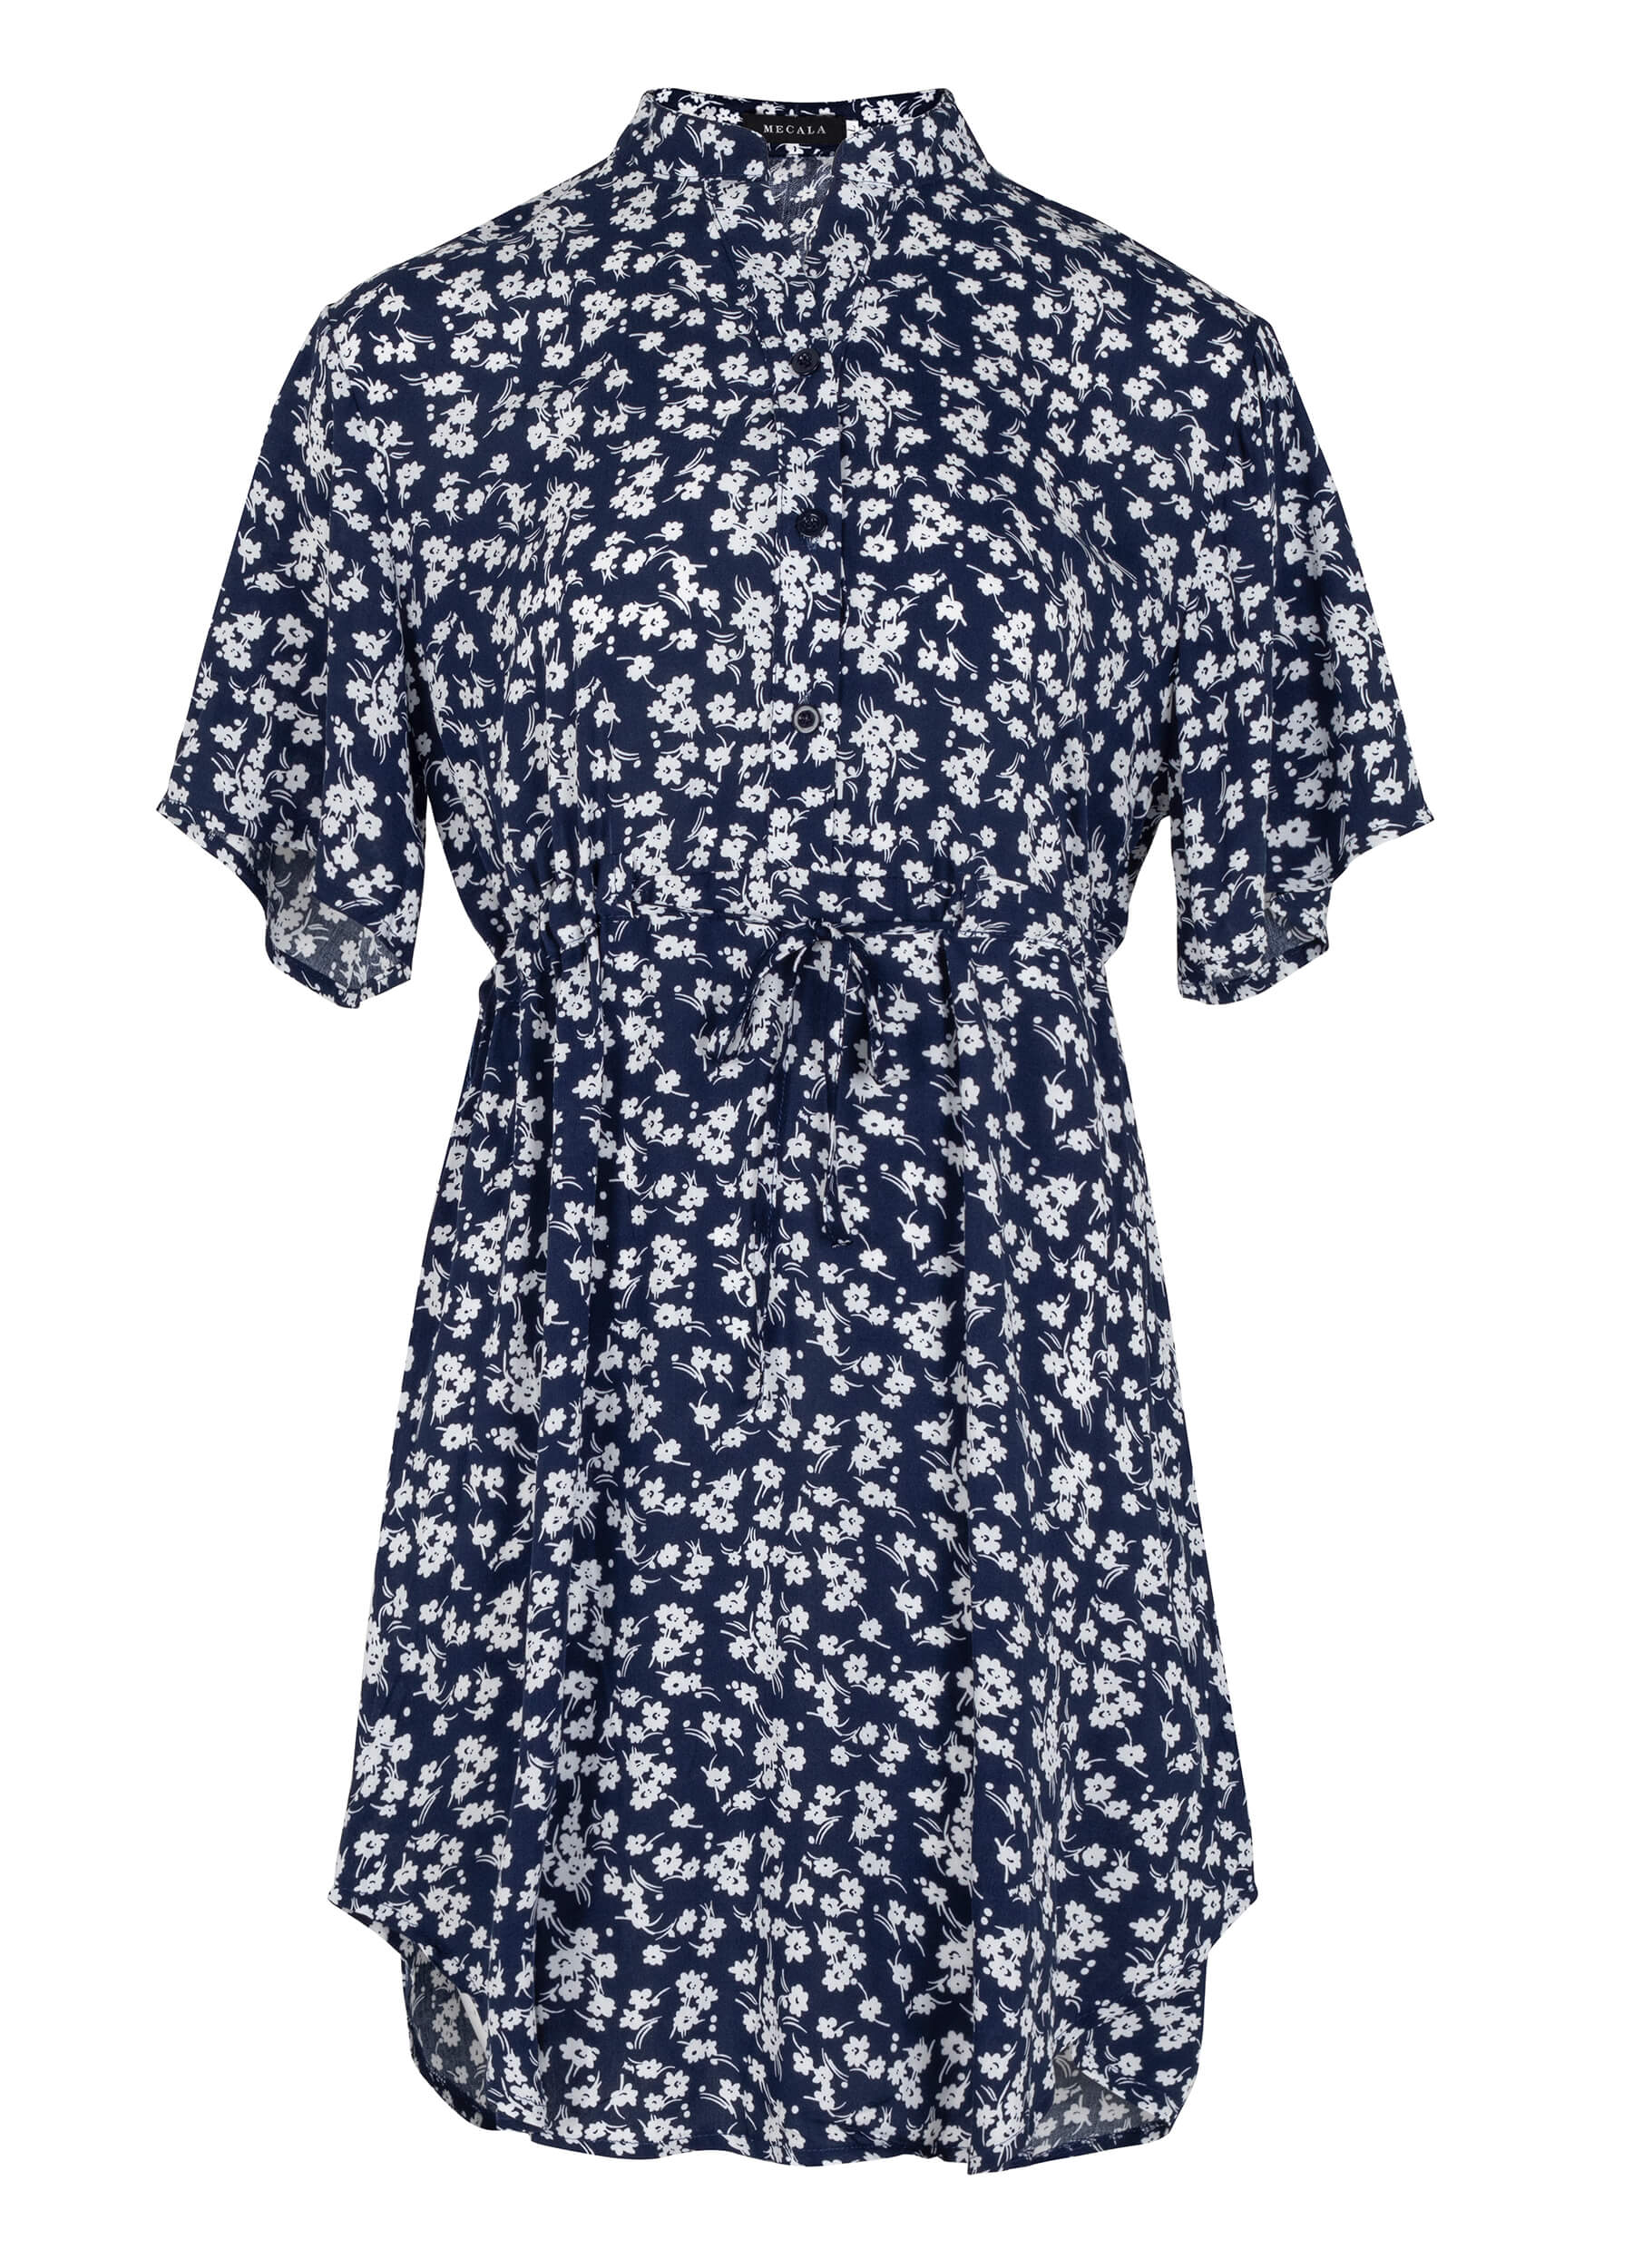 MECALA Women's Summer Floral Print V-Neck Short Sleeve Short Dress-Navy Blue